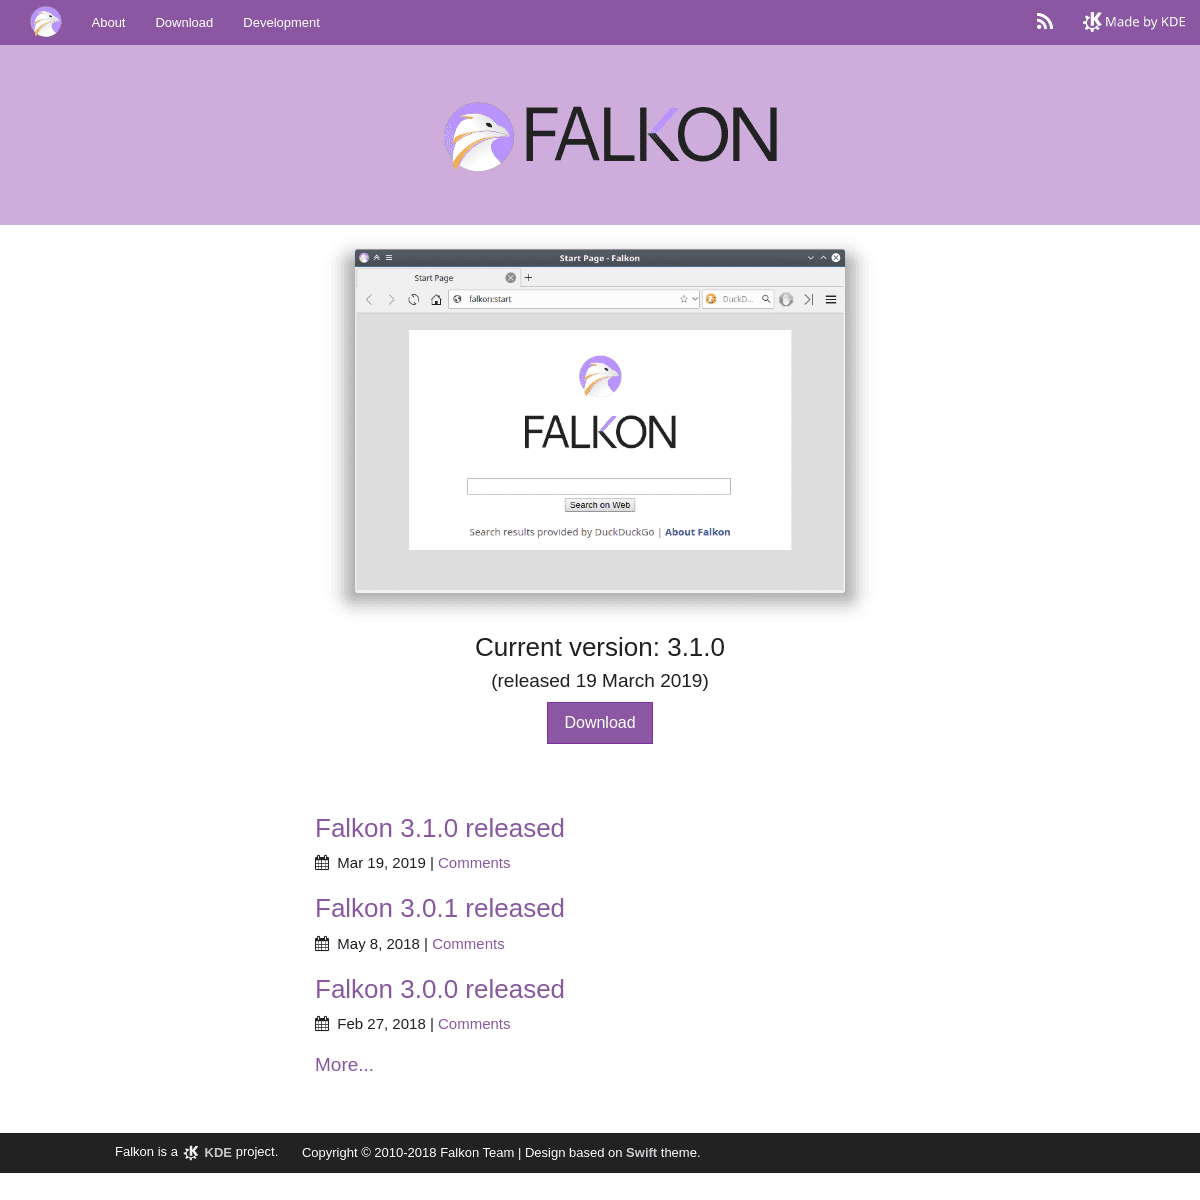 A complete backup of falkon.org